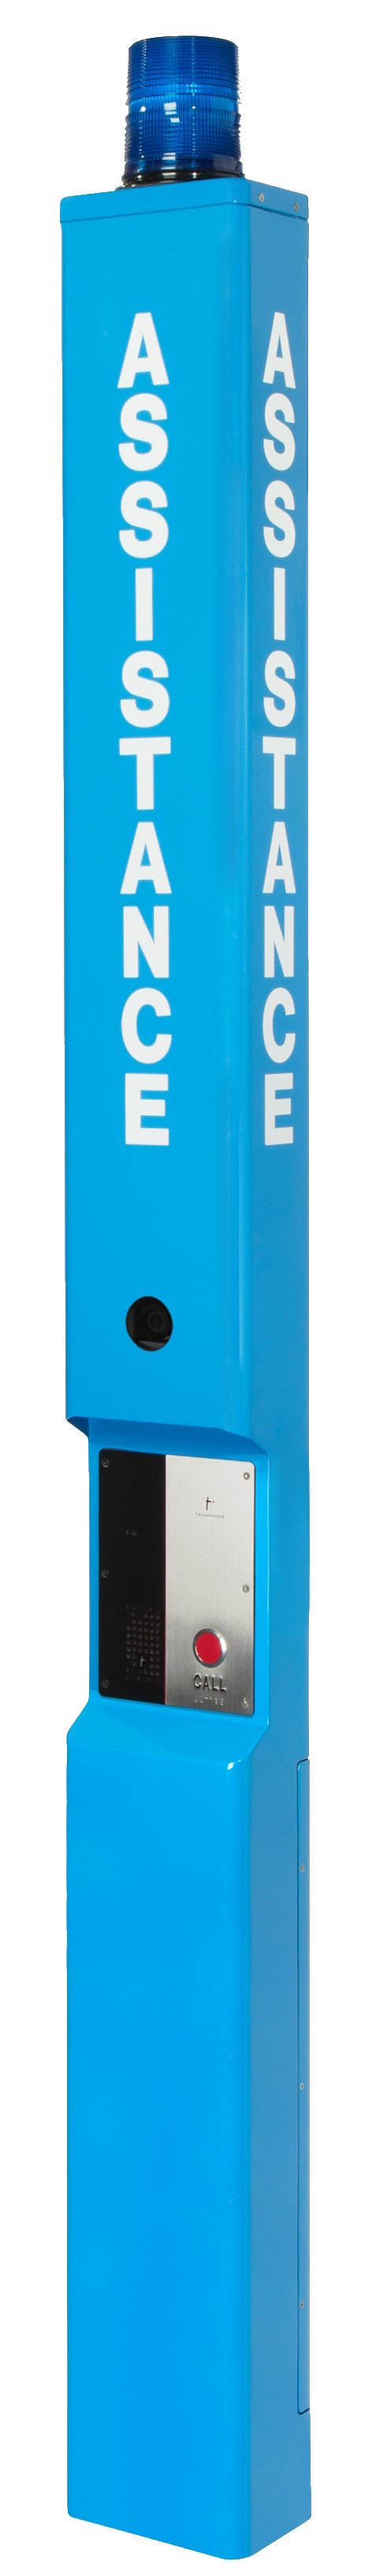 ECO TOWER™ - Aluminum Blue Light Phone Tower, Fixed Camera Ready